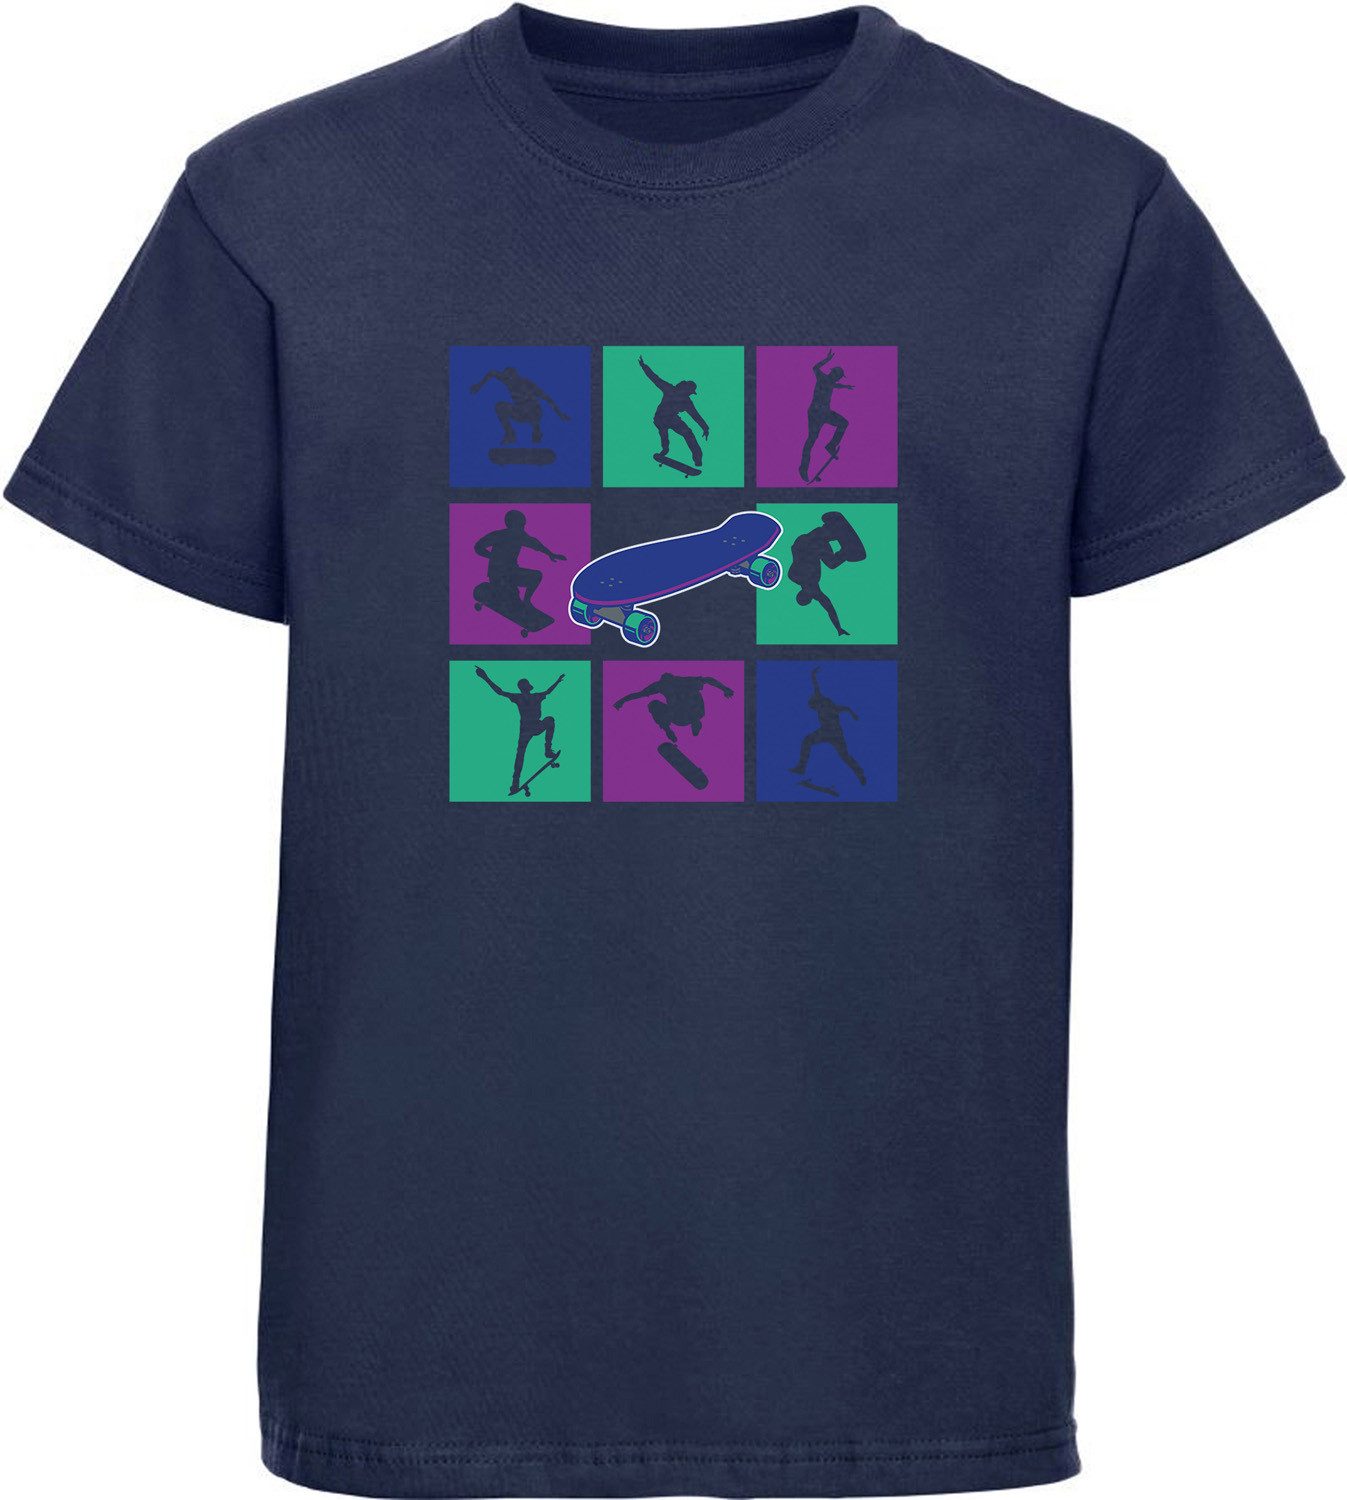 MyDesign24 T-Shirt Kinder Print Shirt Skateboarder Bilder in farbigen cubes Bedrucktes Jungen und Mädchen Skater T-Shirt, i524